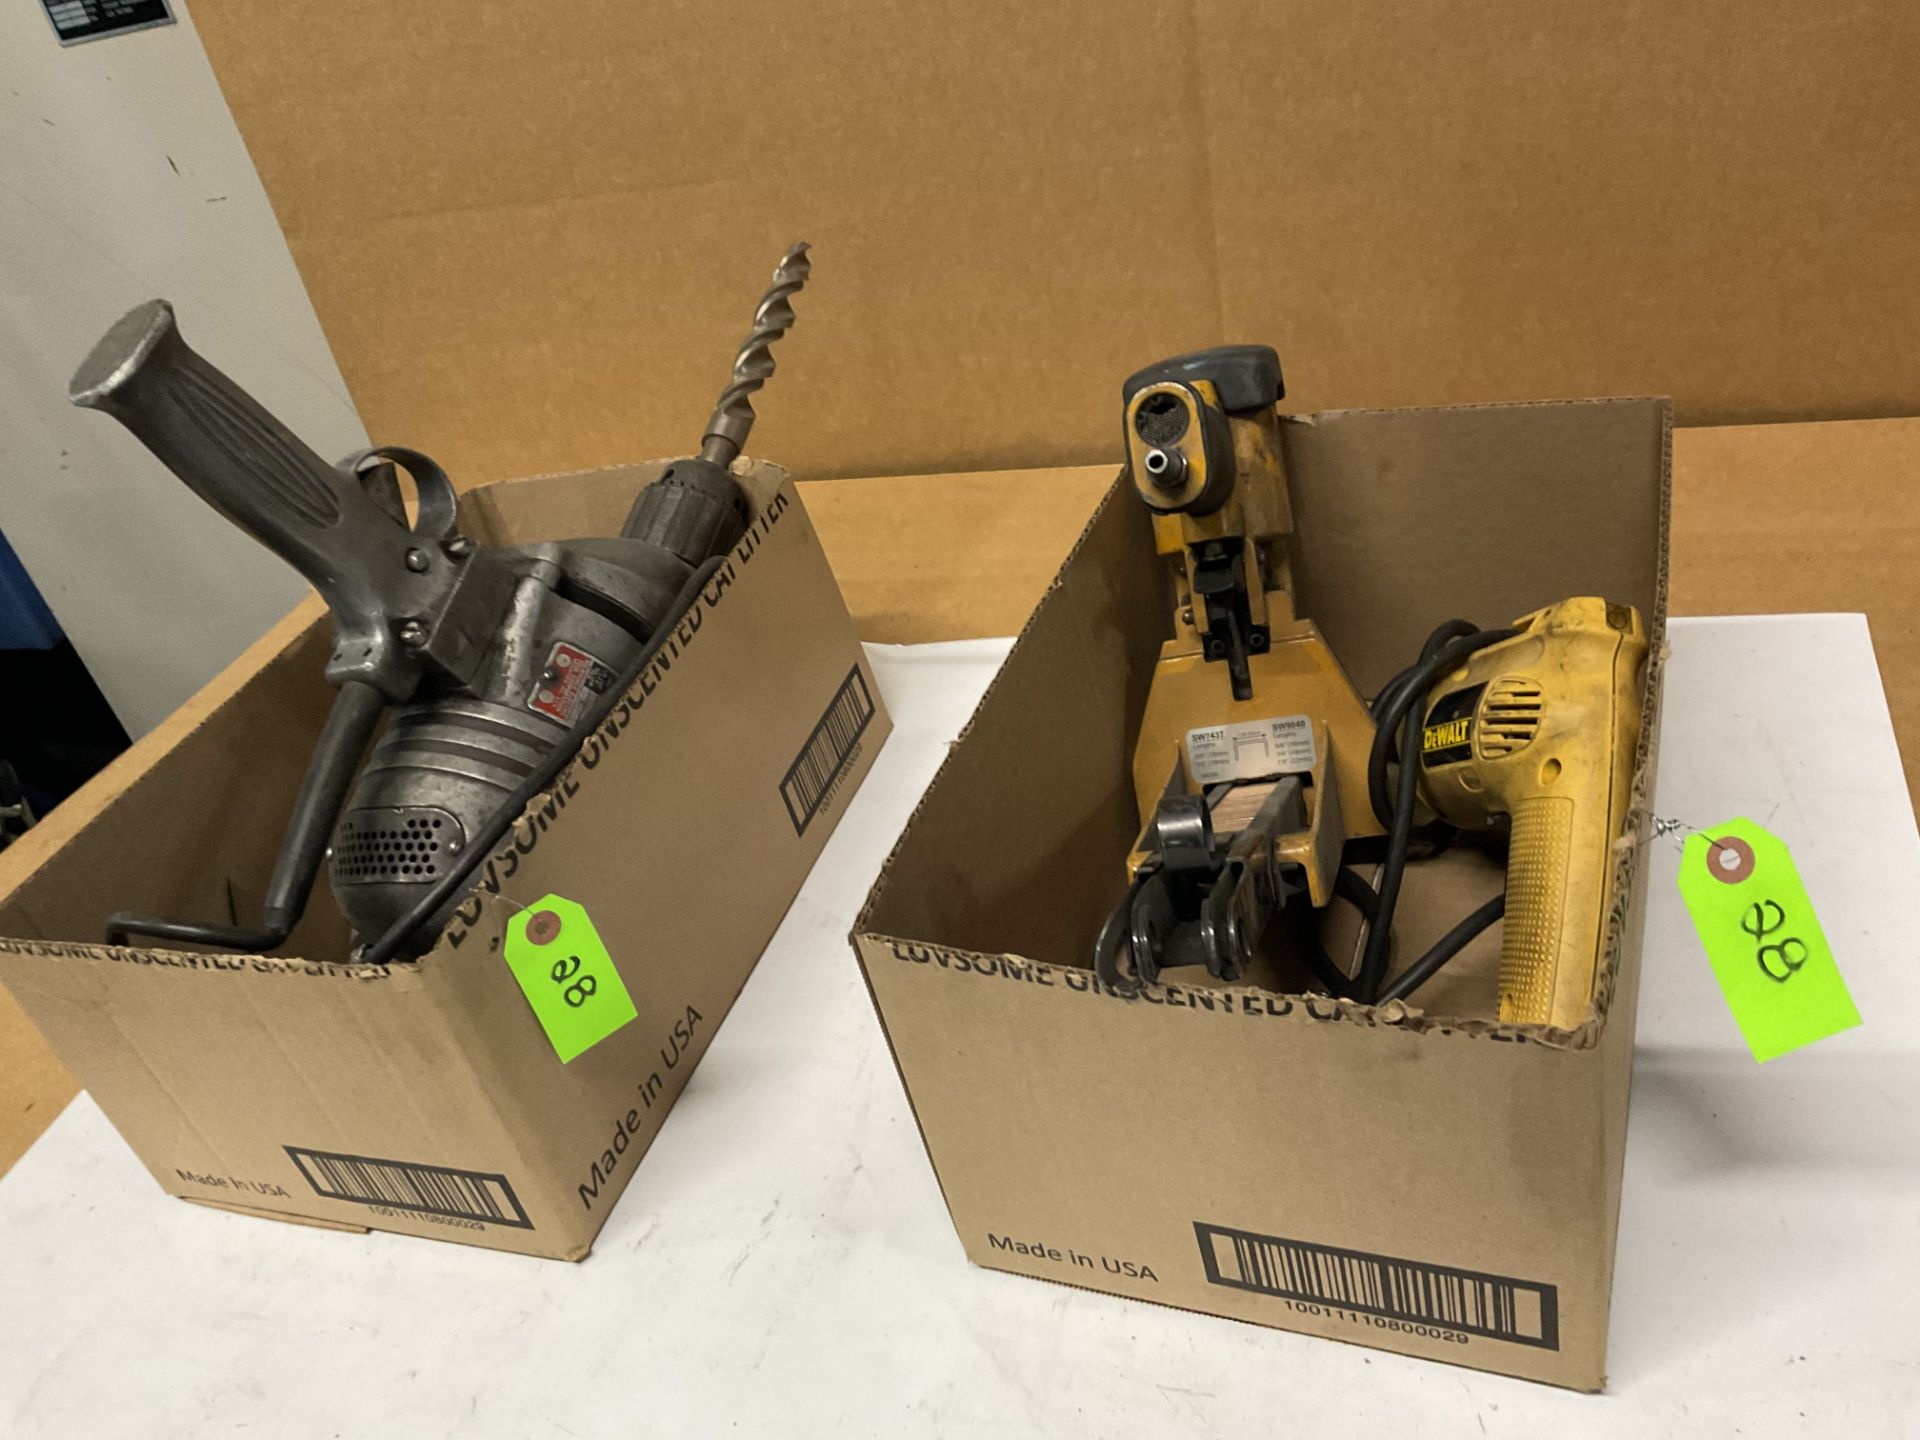 Dewalt dw100 corded drill , Bostitch air stapler (5/8 to 7/8 width staples) , heavy duty Milwaukee